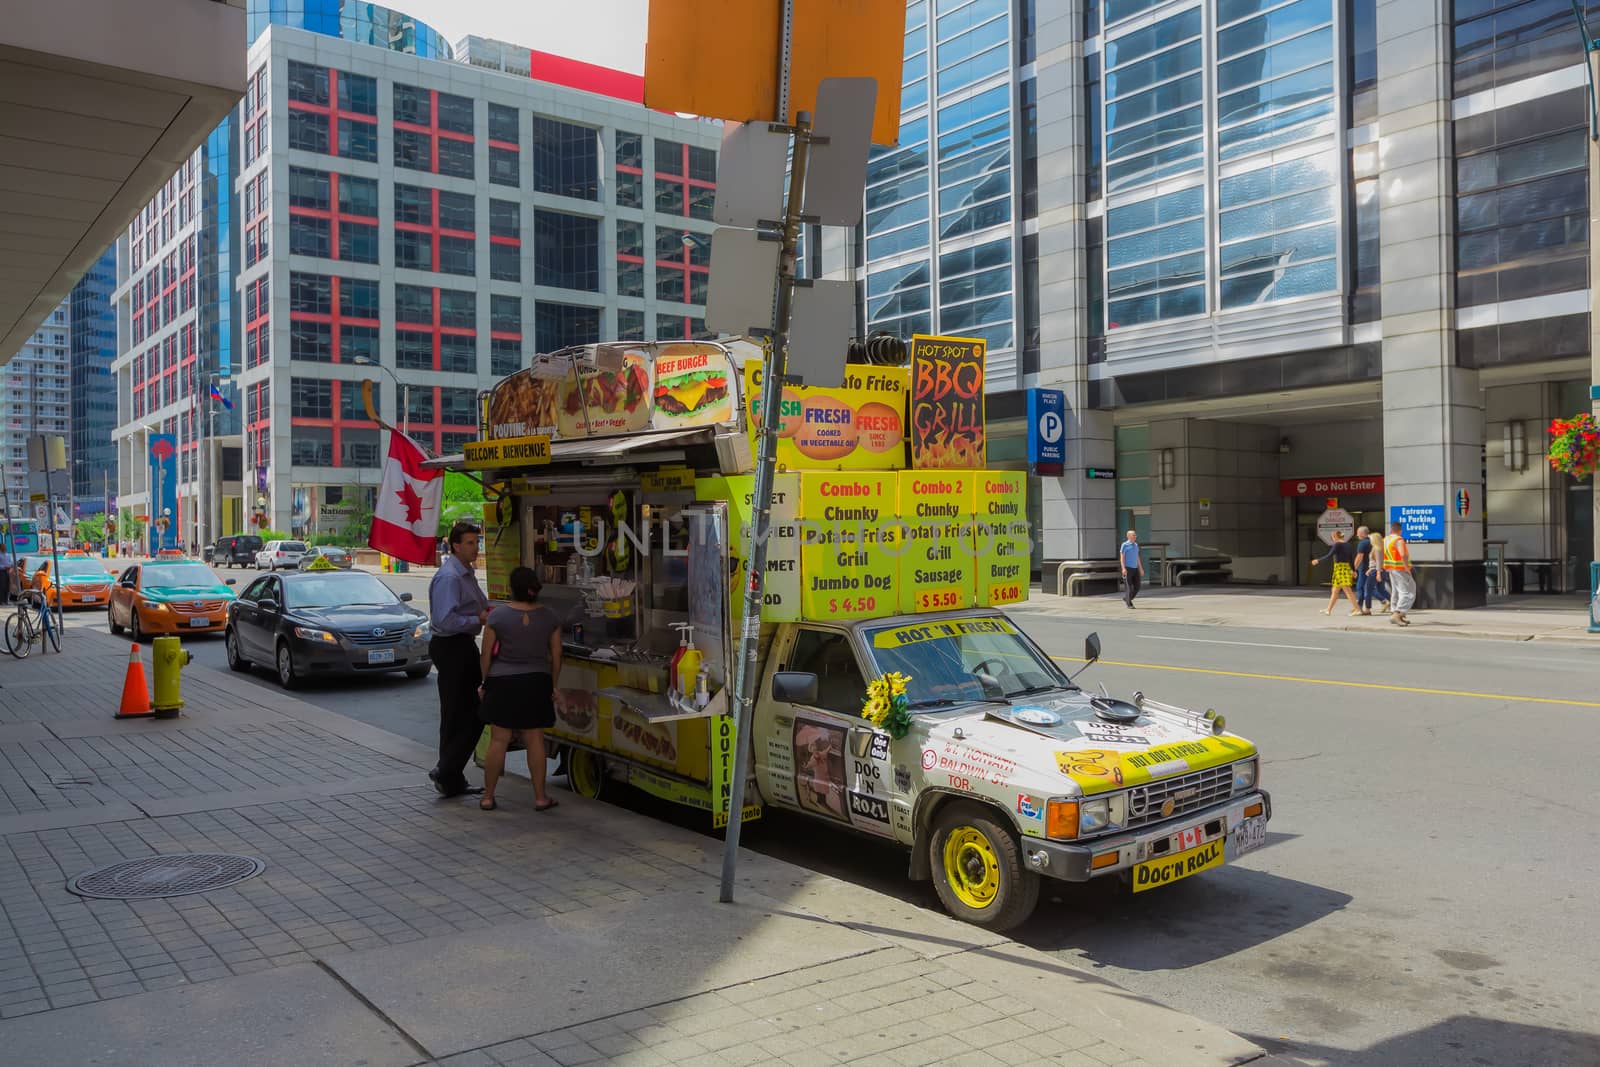 Hotdog seller in Toronto by petkolophoto